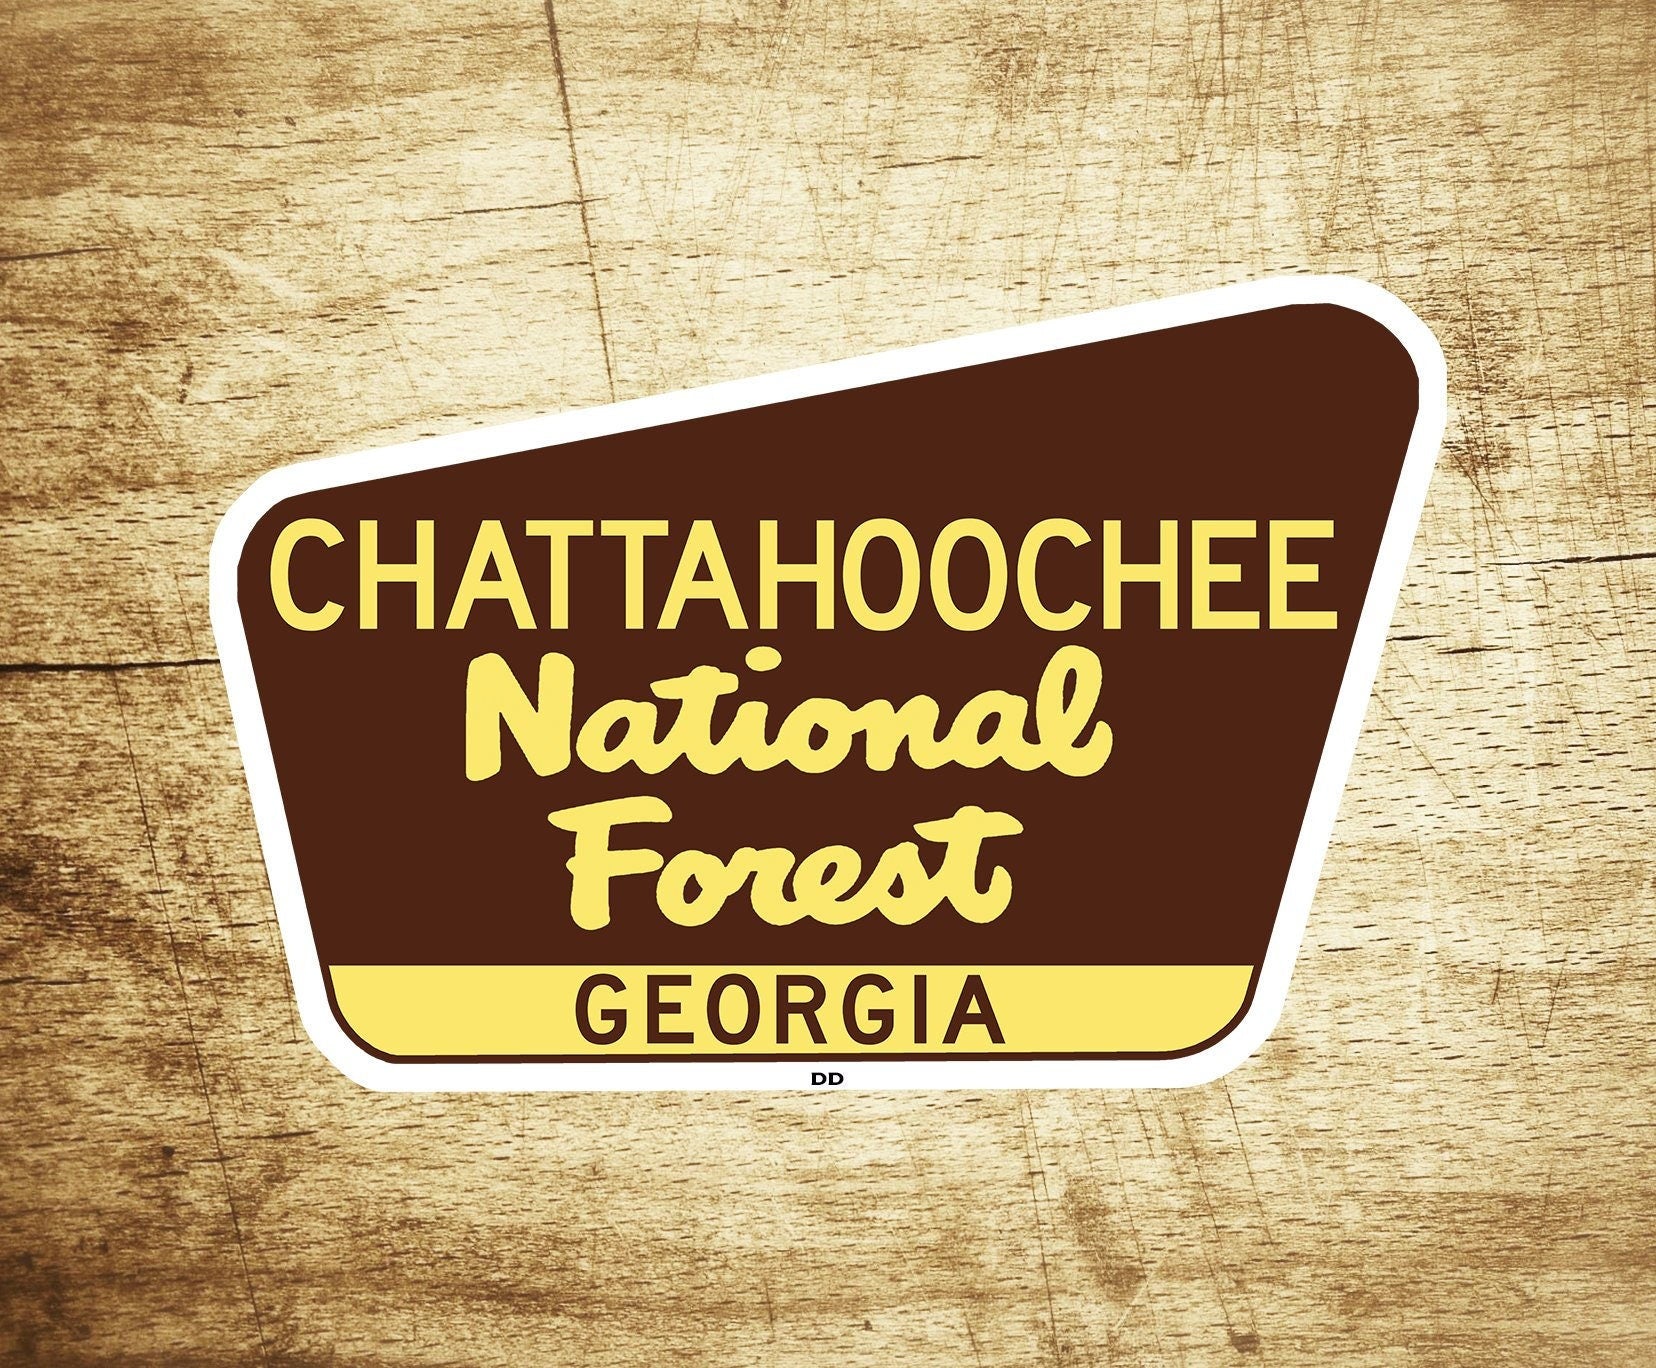 Chattahoochee National Forest Georgia Park Decal 3.75" x 2.5"